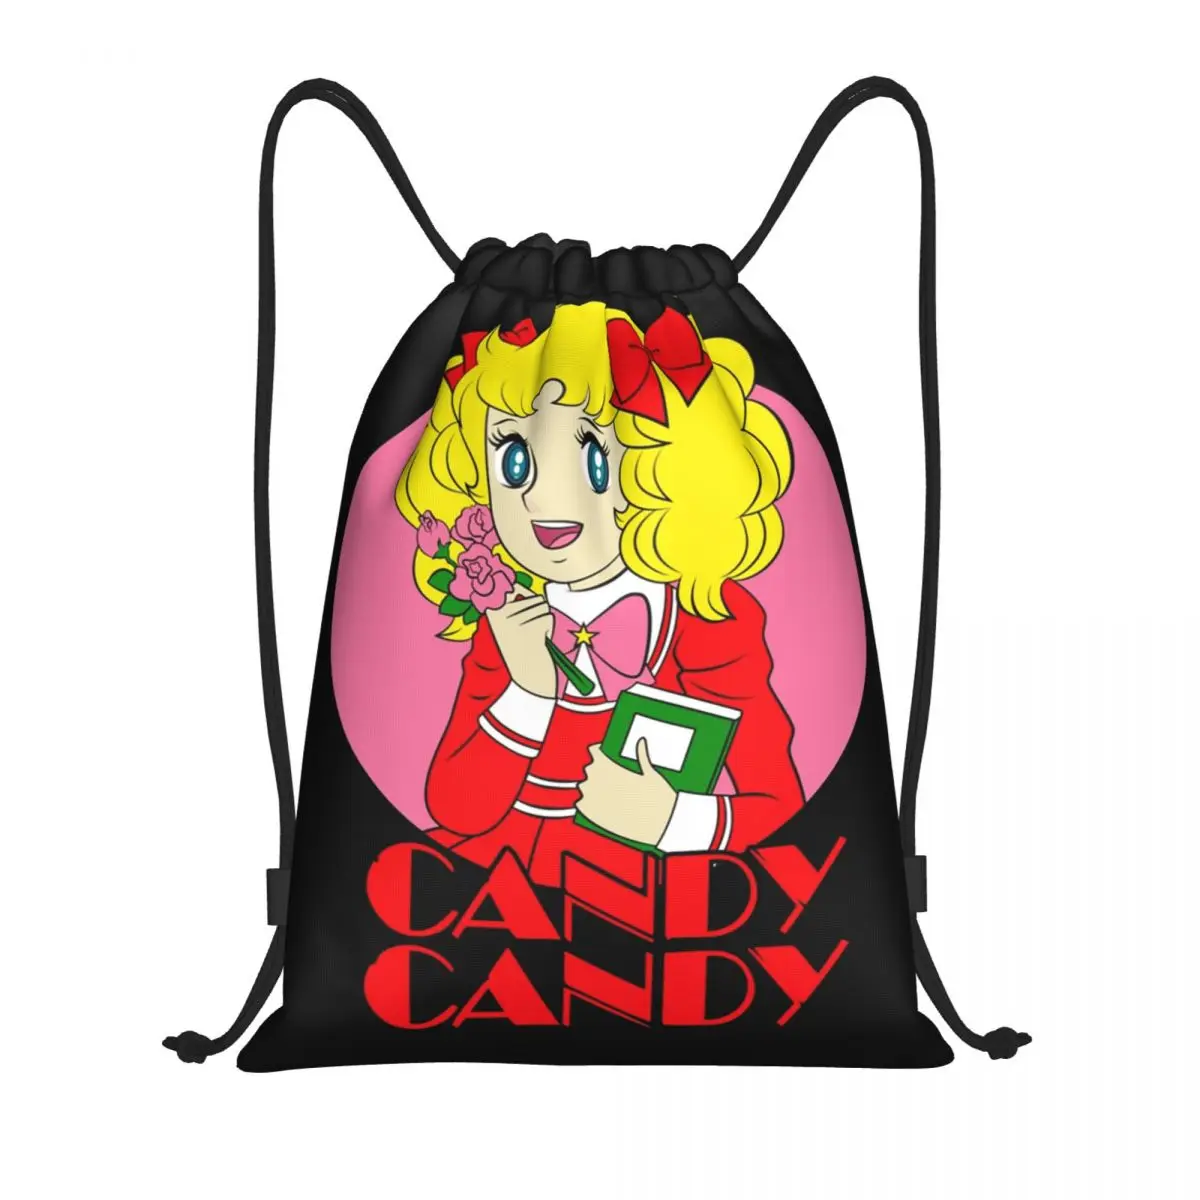 Candy Candy Drawstring Backpack Women Men Gym Sport Sackpack Foldable Anime Japan Shopping Bag Sack